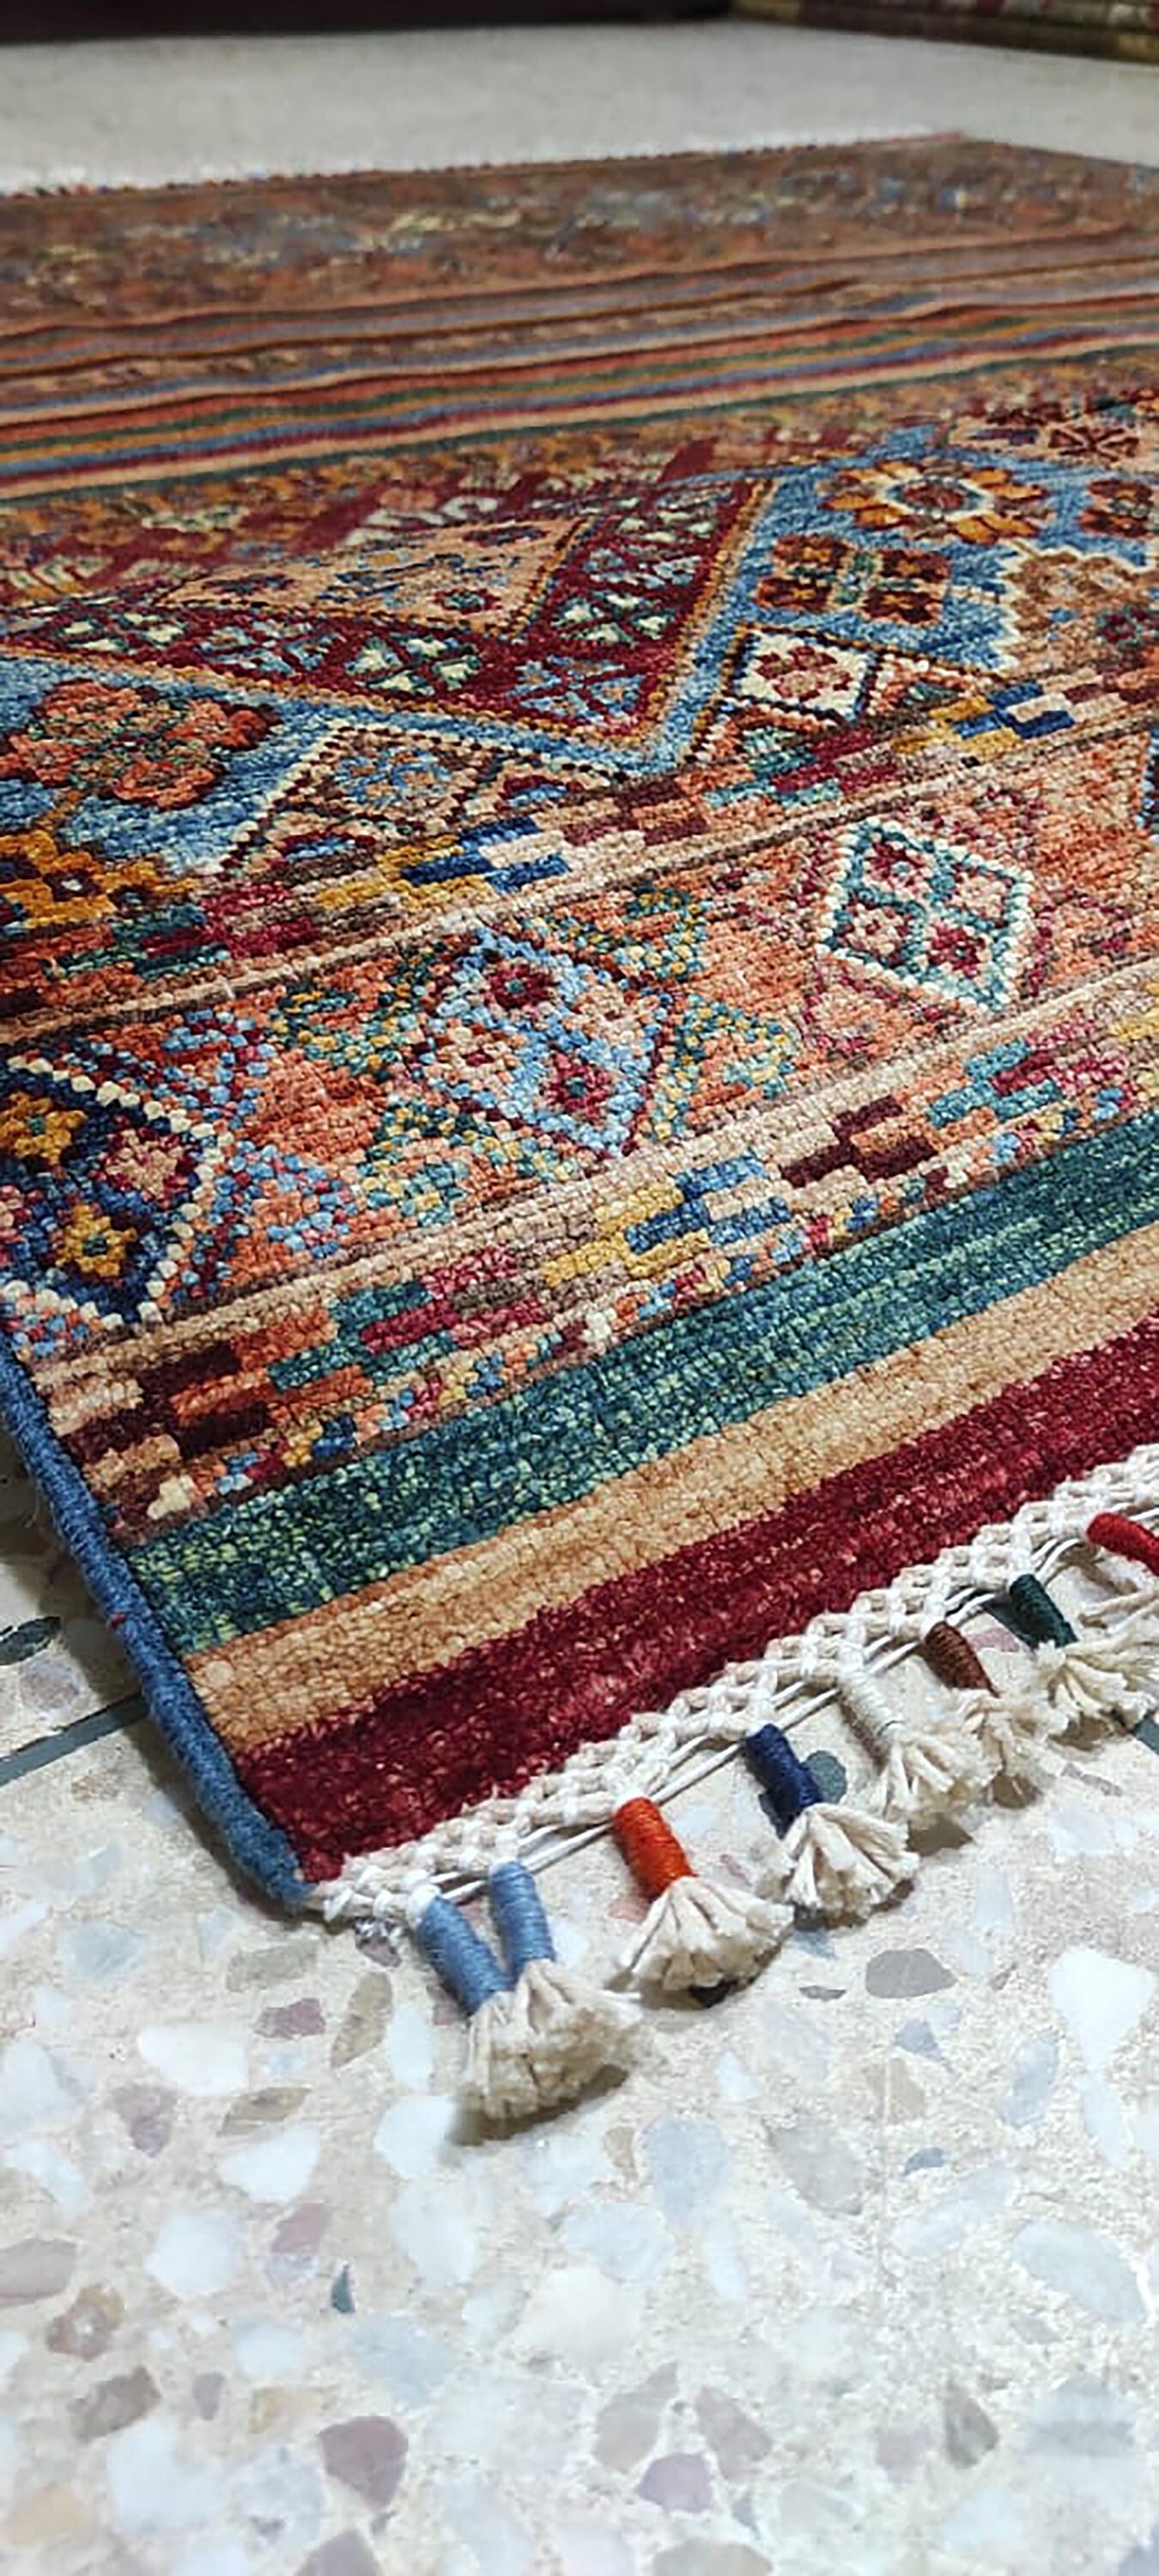 5x7 afghan area rug, carpet bag purse, hooked rugs large, tribal rug, sumak rug, antique distressed, persian rug, nursery decor, chindi rug